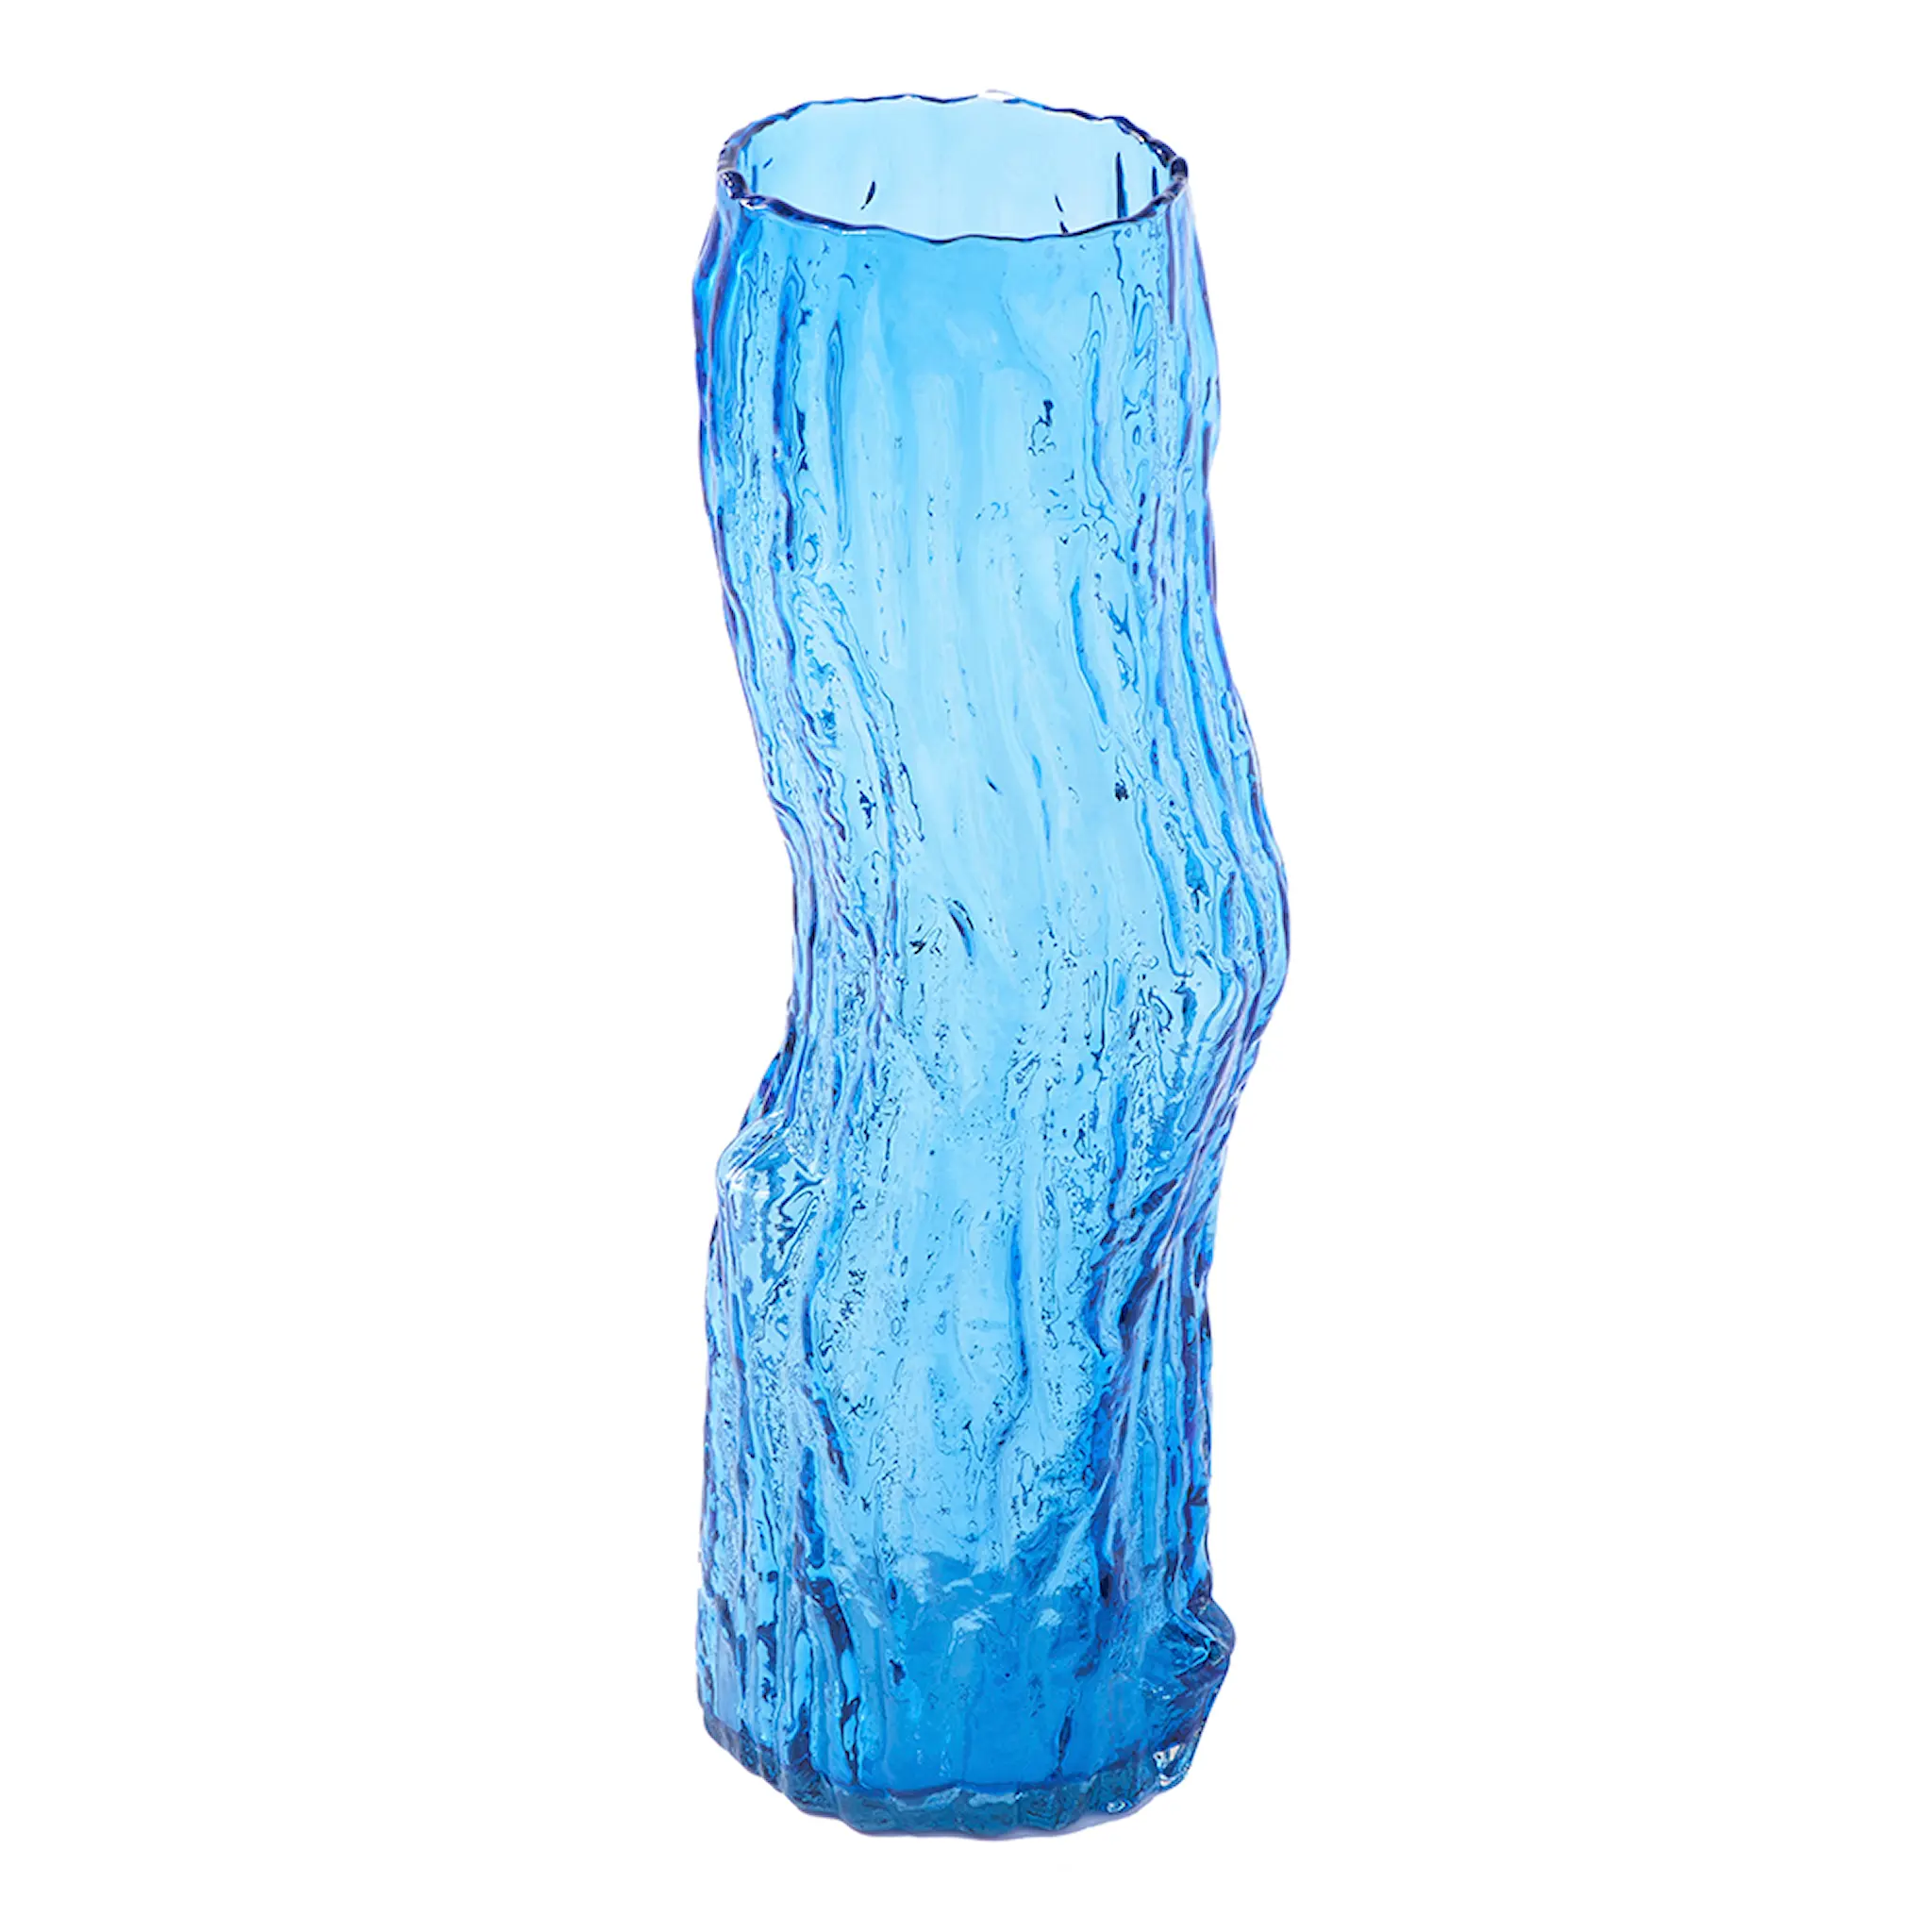 Pols Potten Tree log vase 62 cm blå